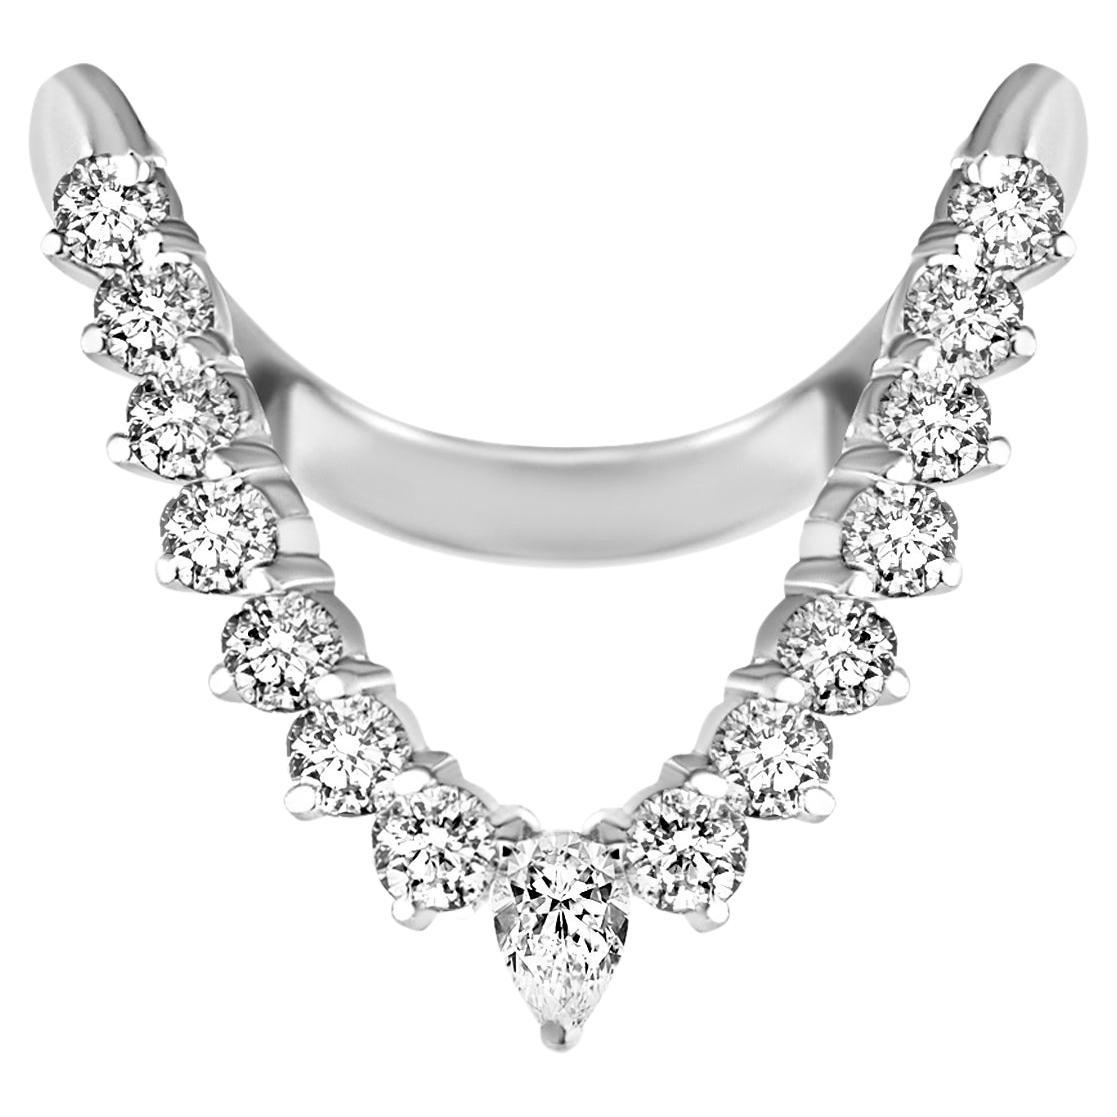 Vanki Diamond Ring - Fully Studded